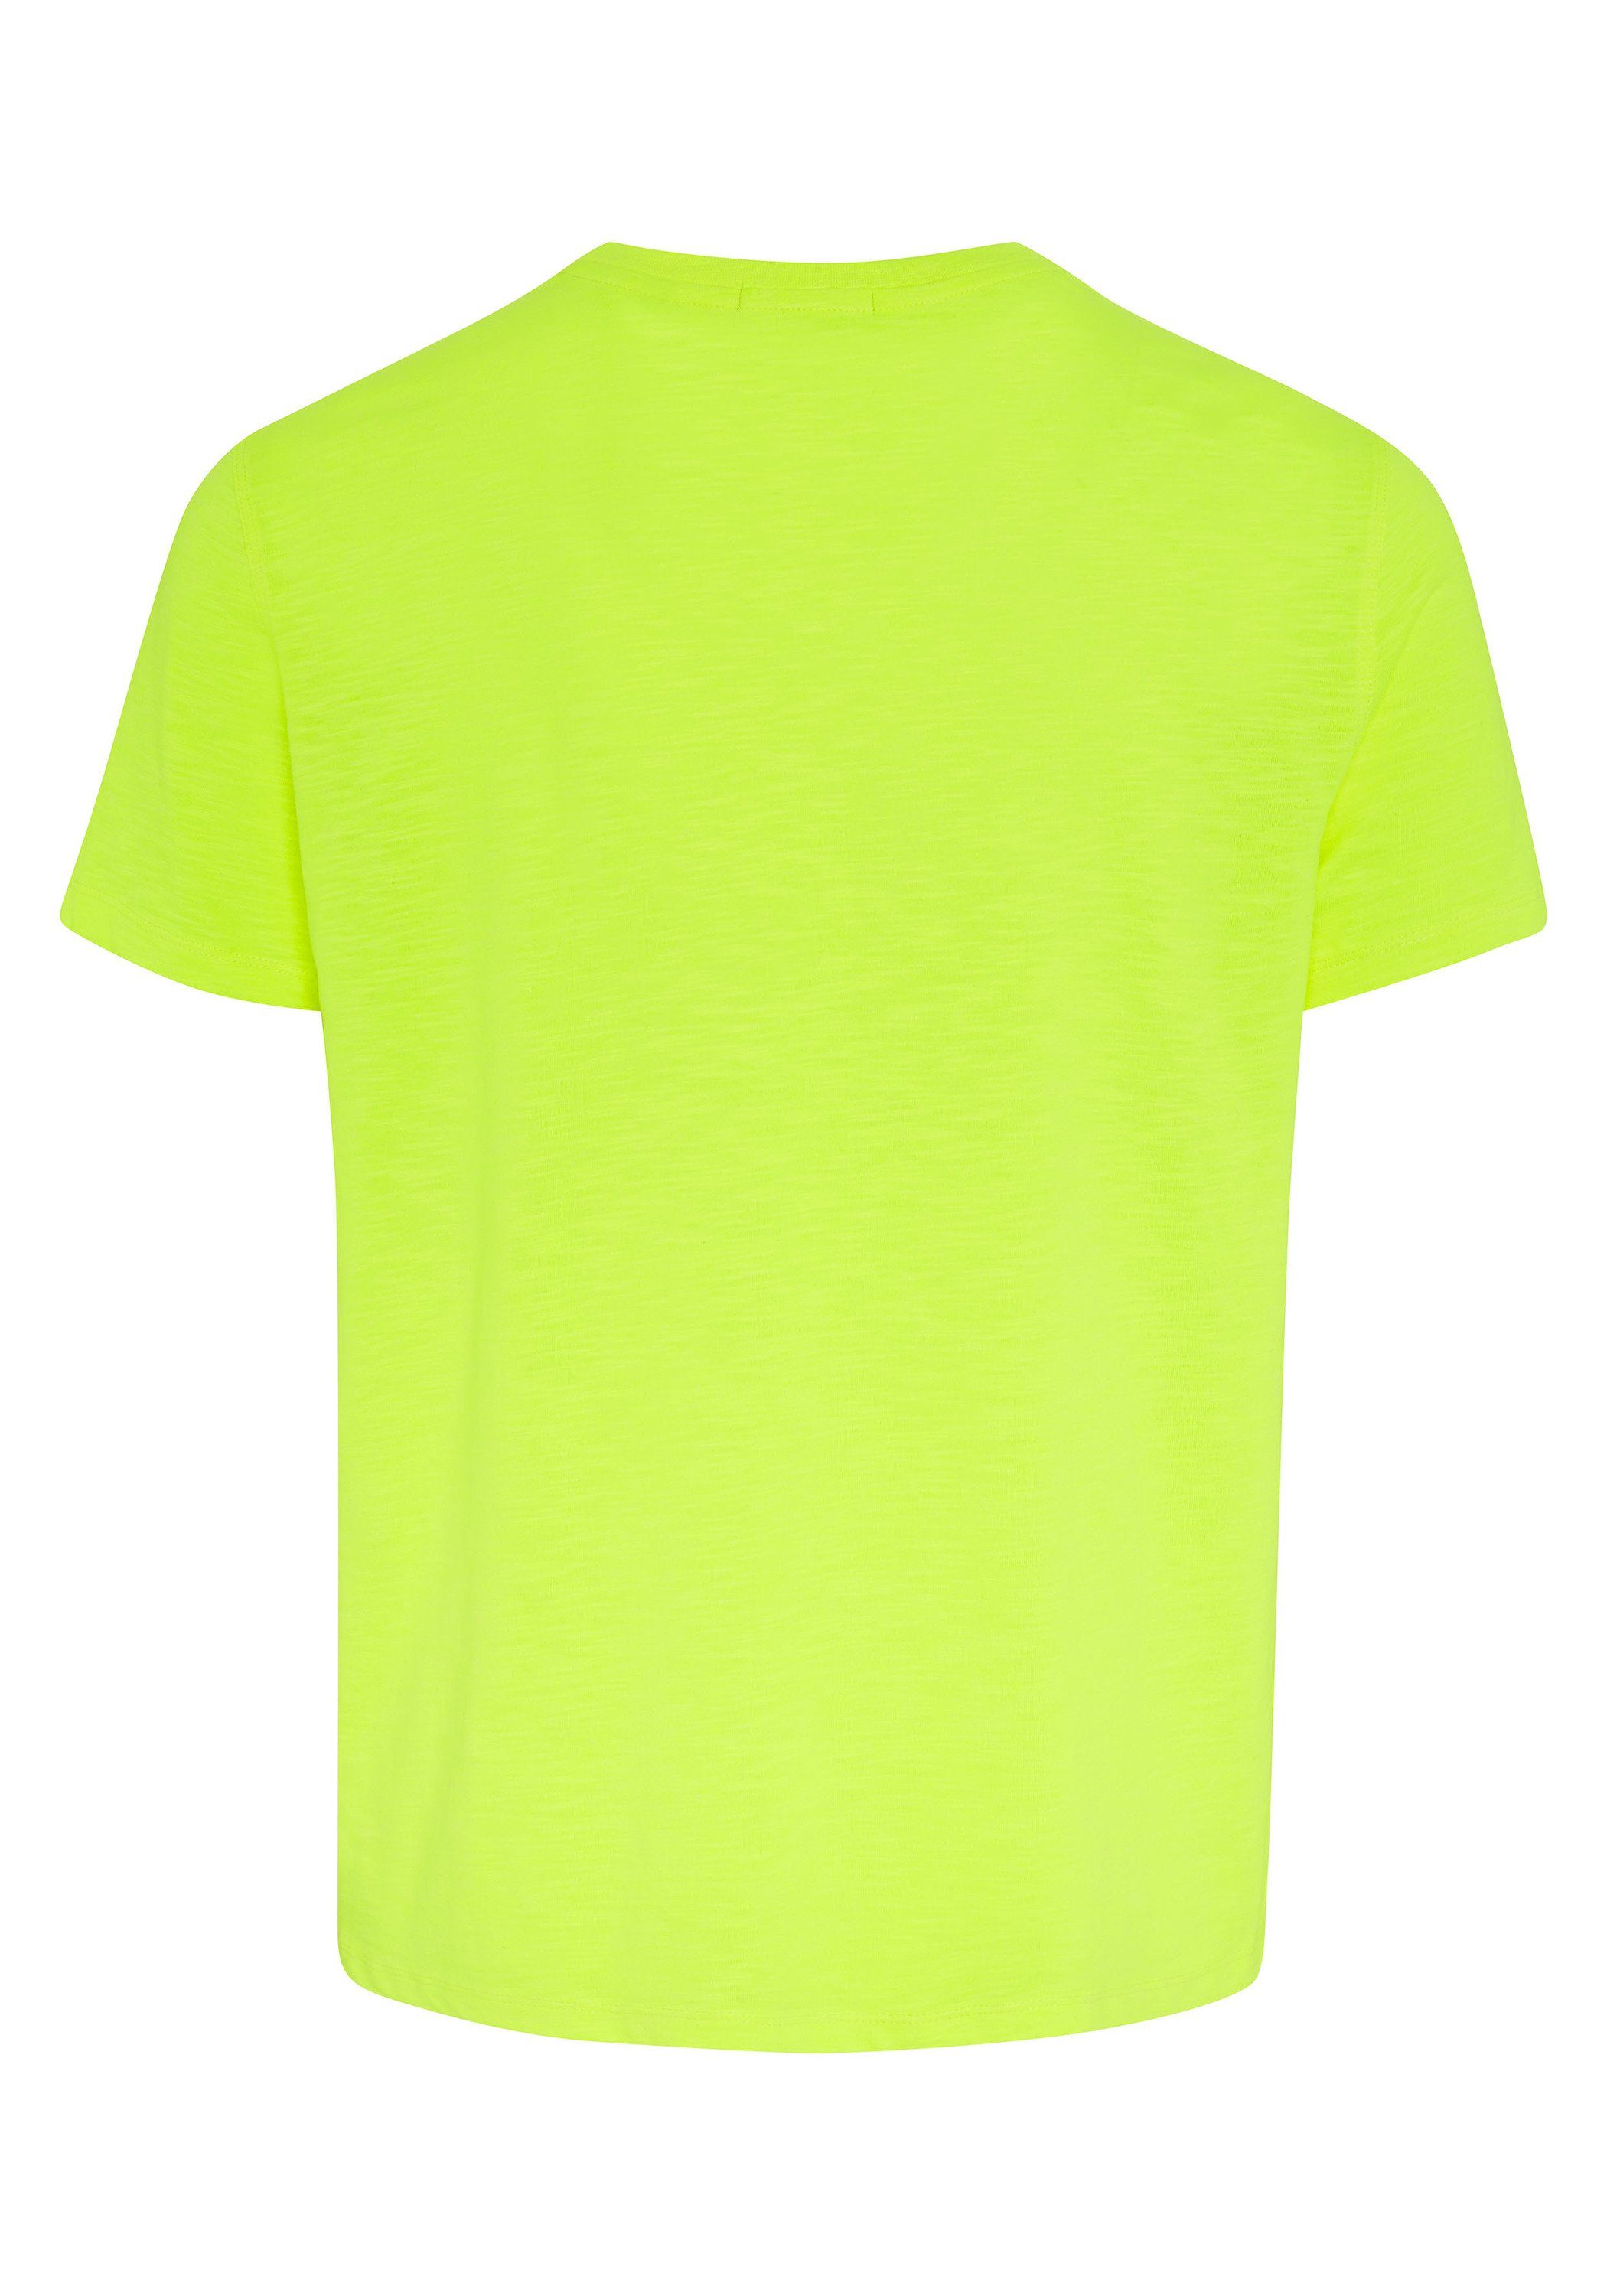 1 mit Print-Shirt Safety gedrucktem Chiemsee Yellow Label-Symbol T-Shirt